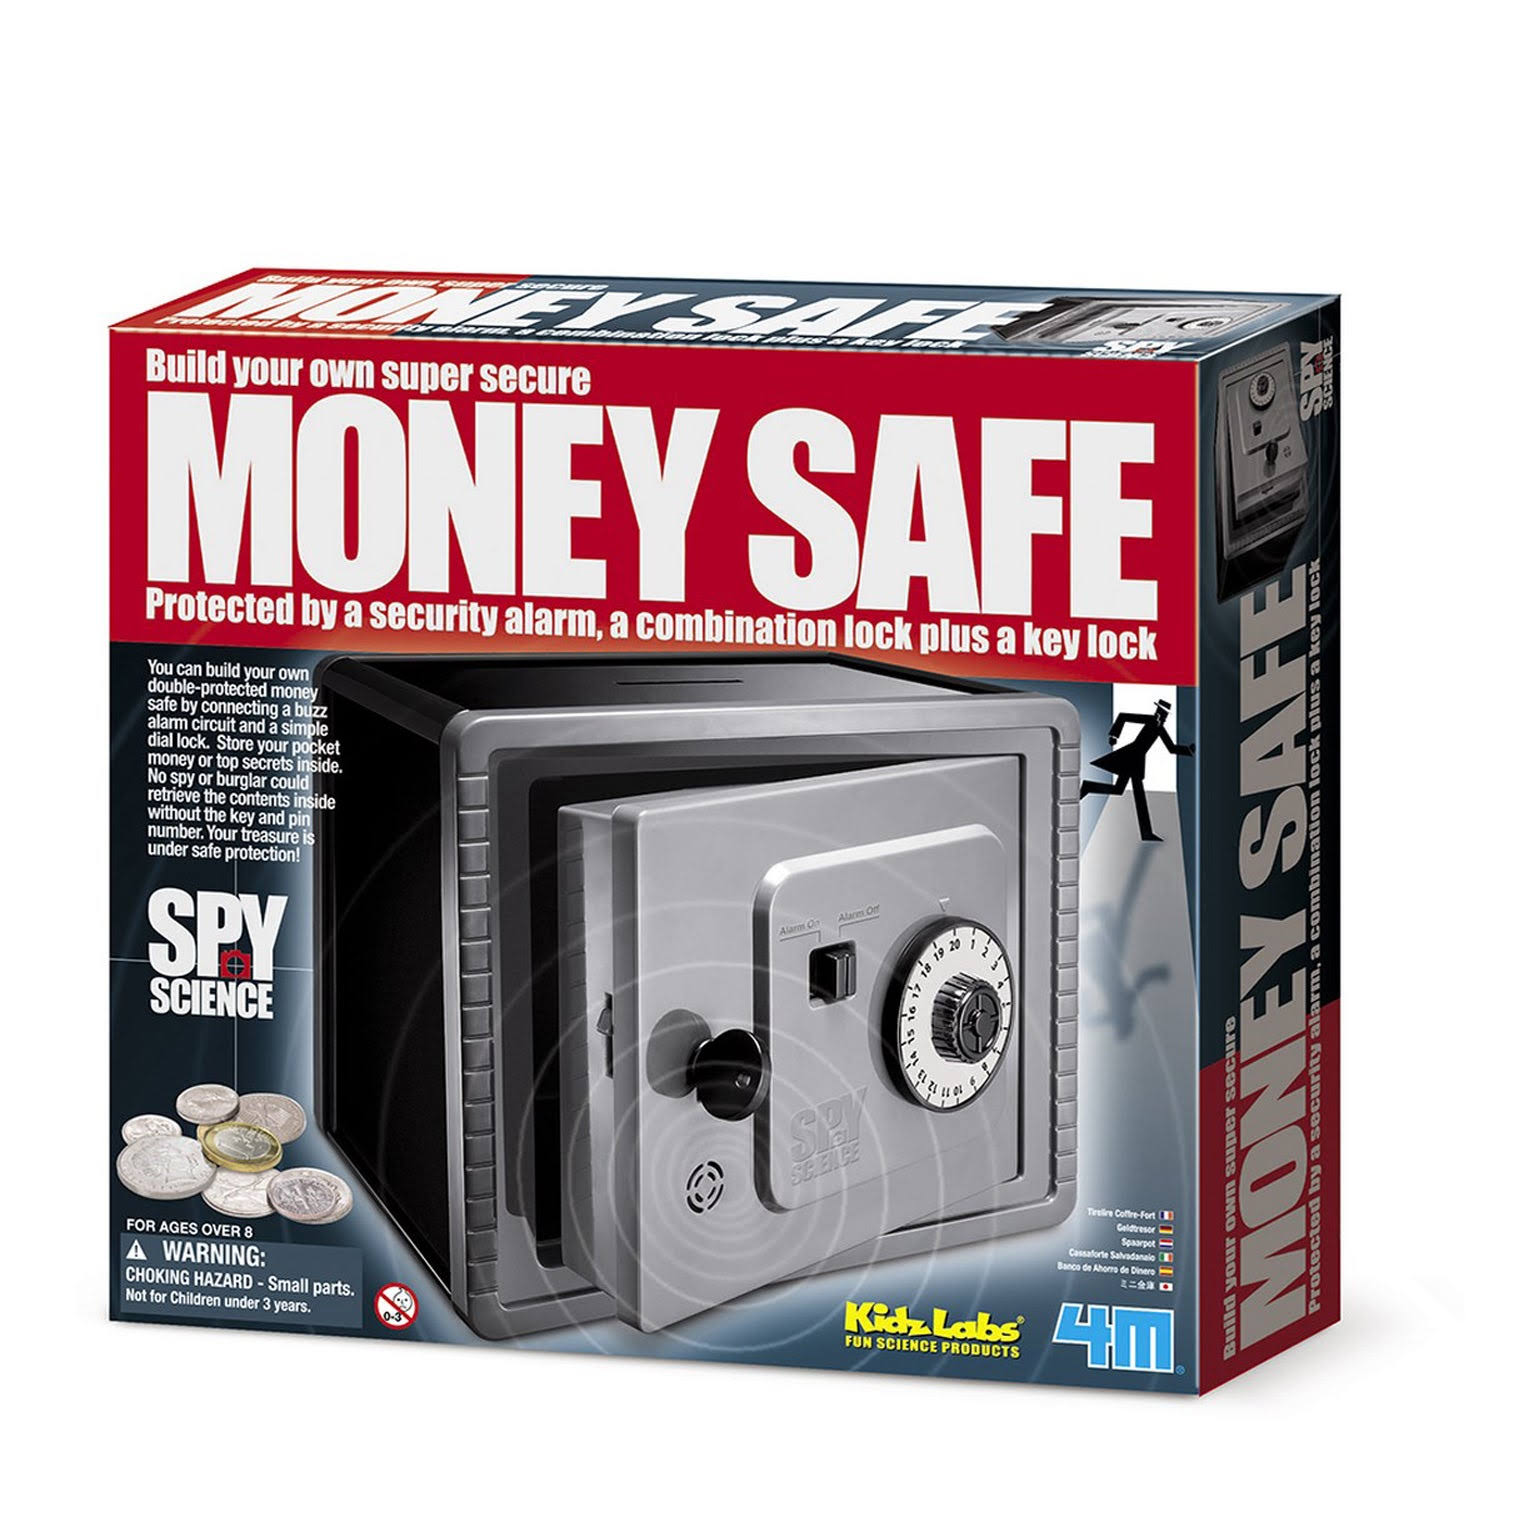 4M Spy Science Alarmed Safe Money Bank